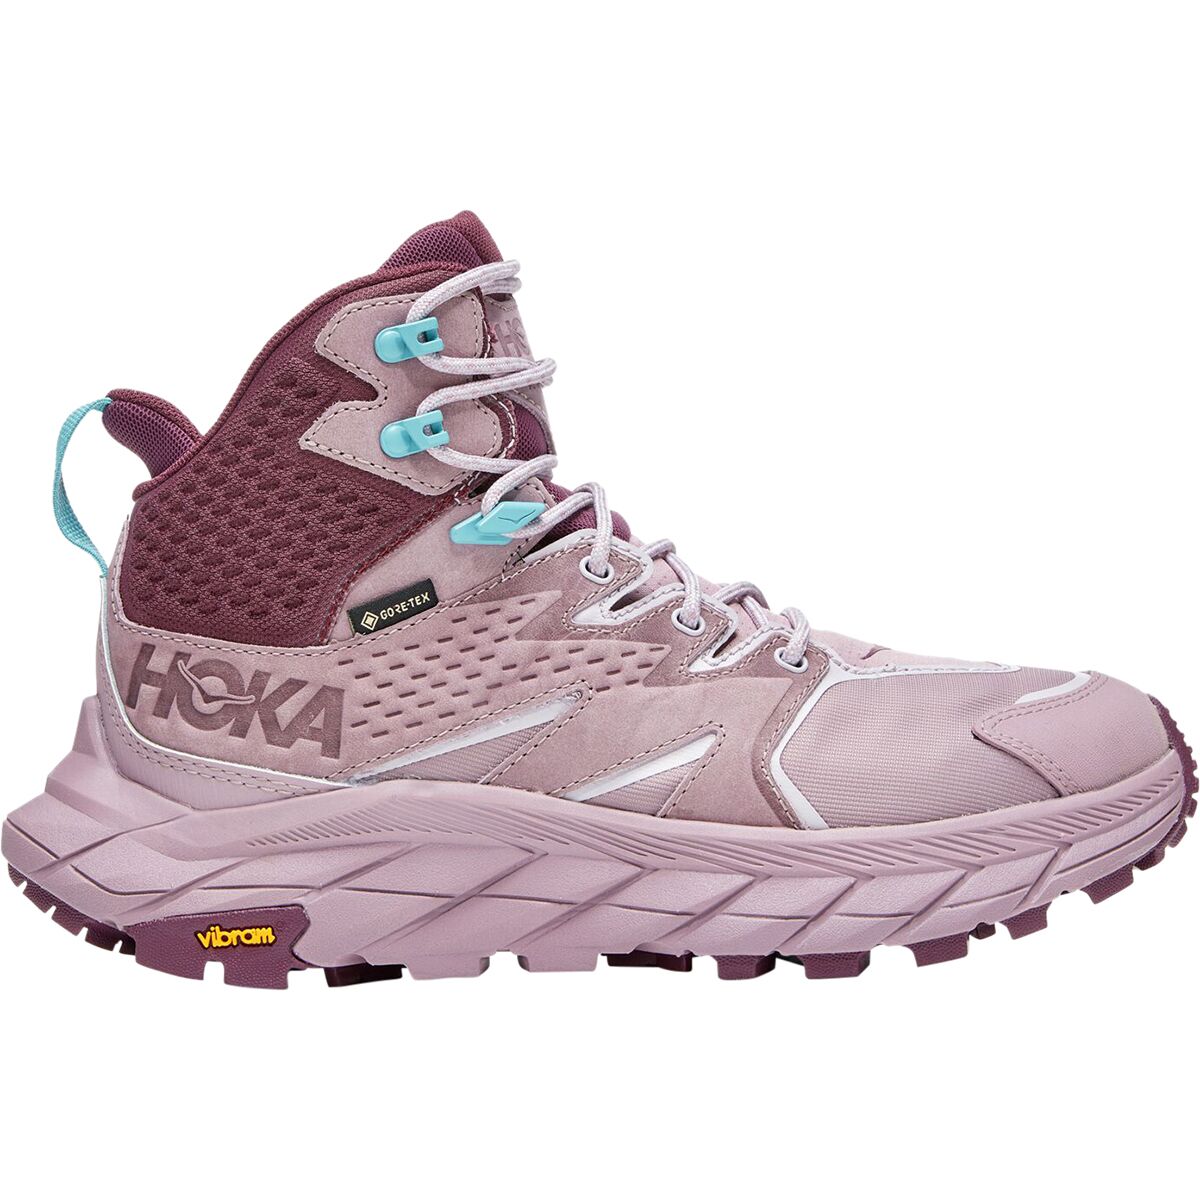 Anacapa Mid GTX Hiking Boot - Women